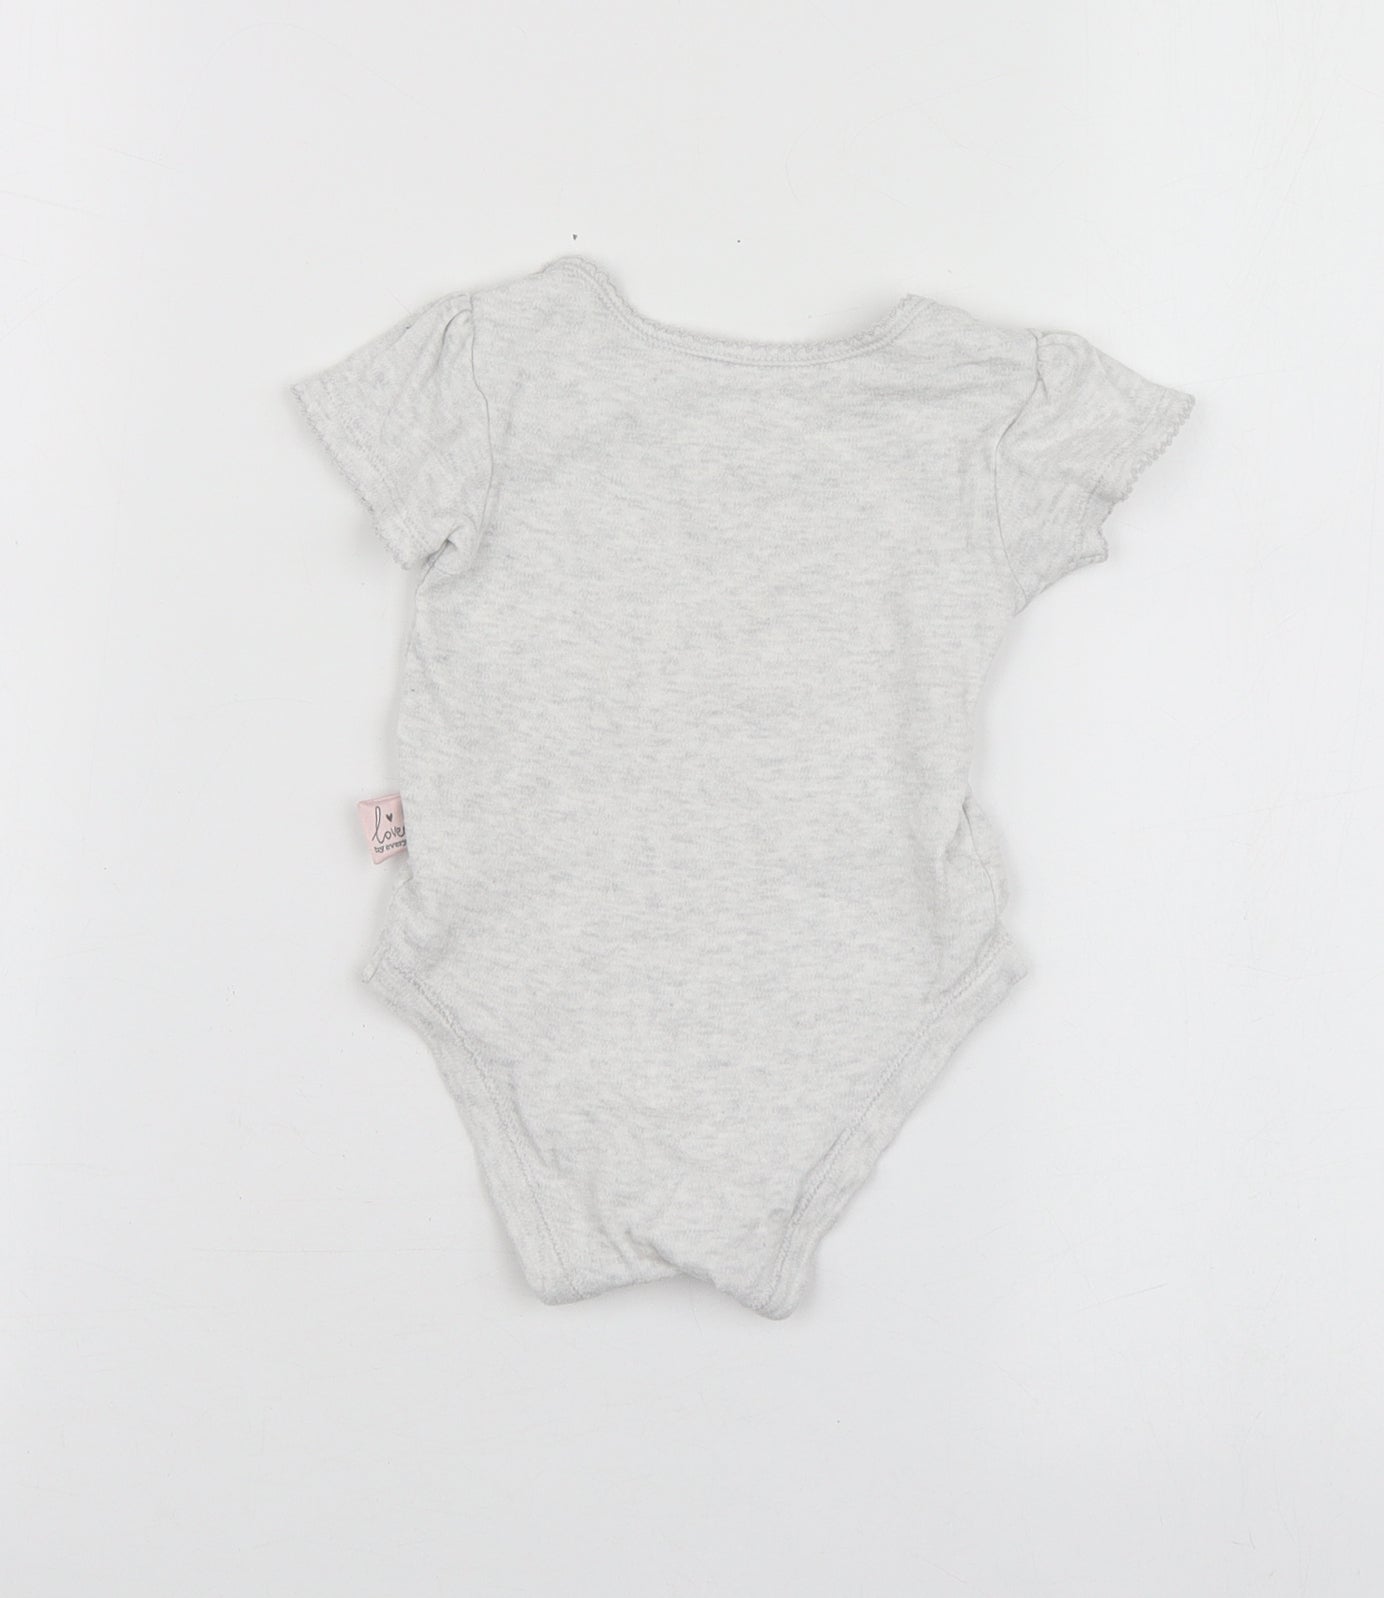 George Girls Grey Geometric Cotton Babygrow One-Piece Size 6-9 Months   - 101 Dalmatians